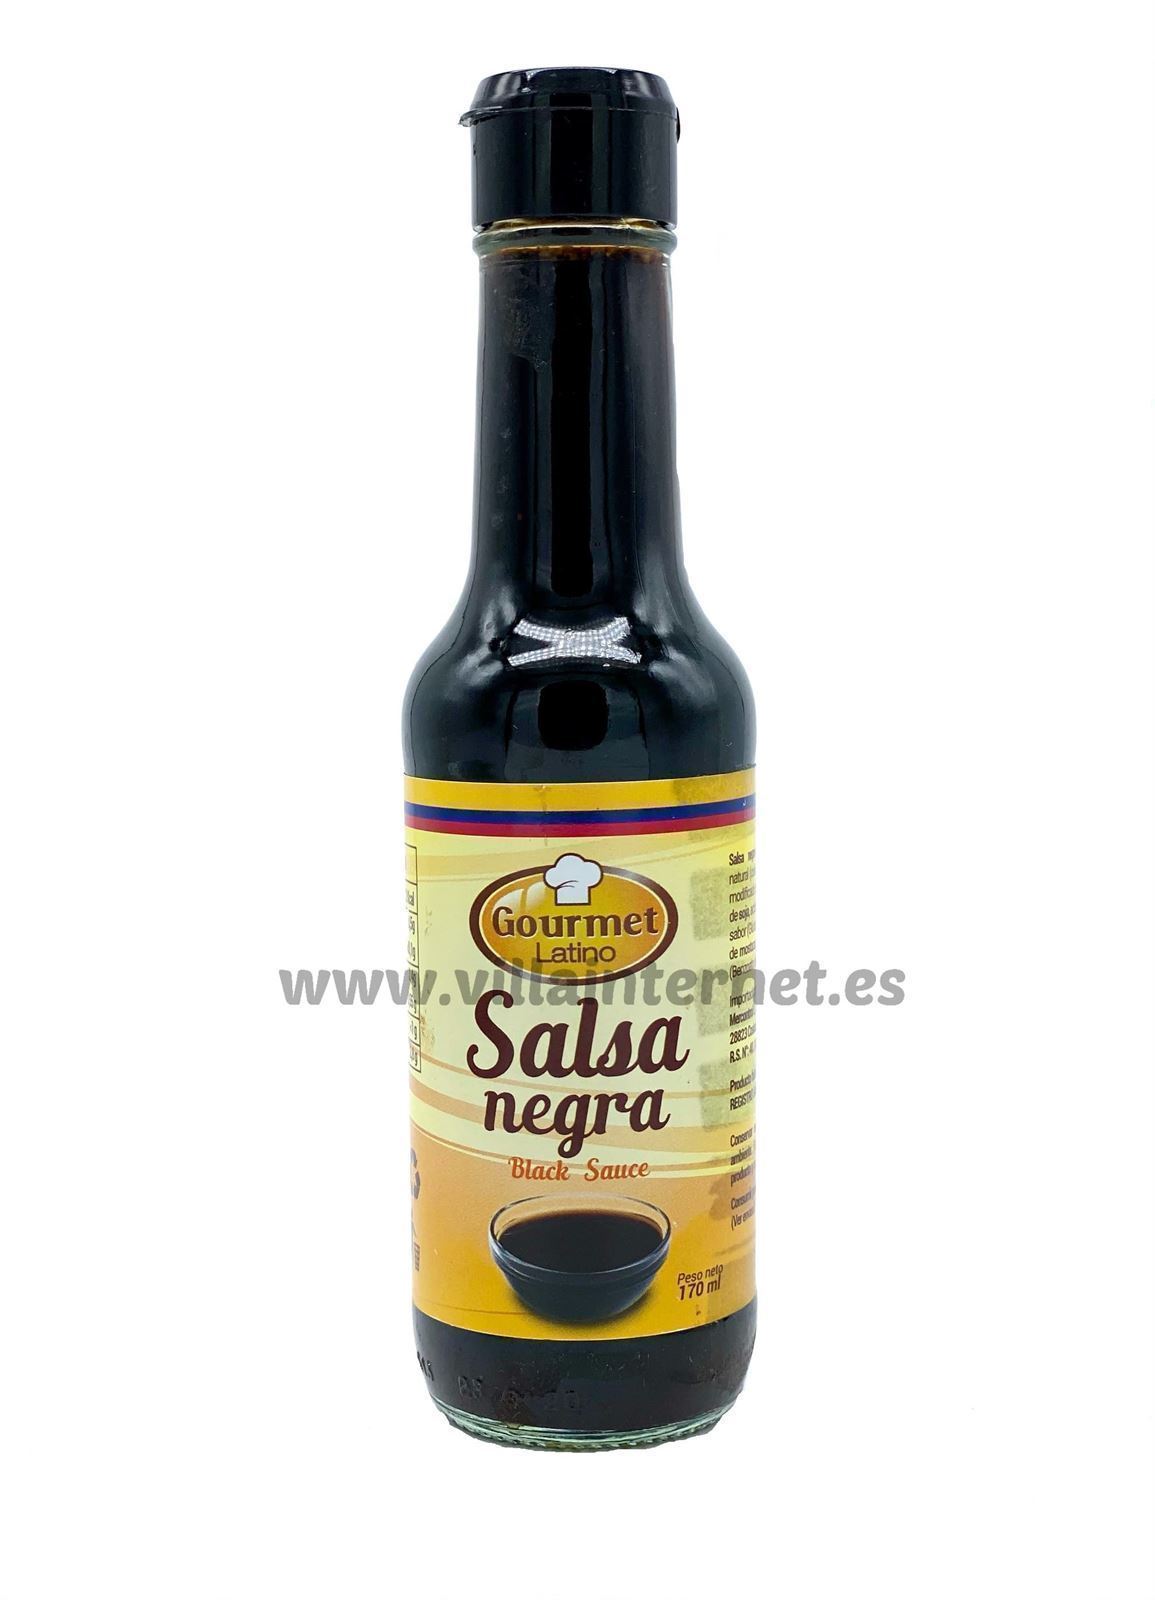 Salsa negra Gourmet Latino 170ml - Imagen 1